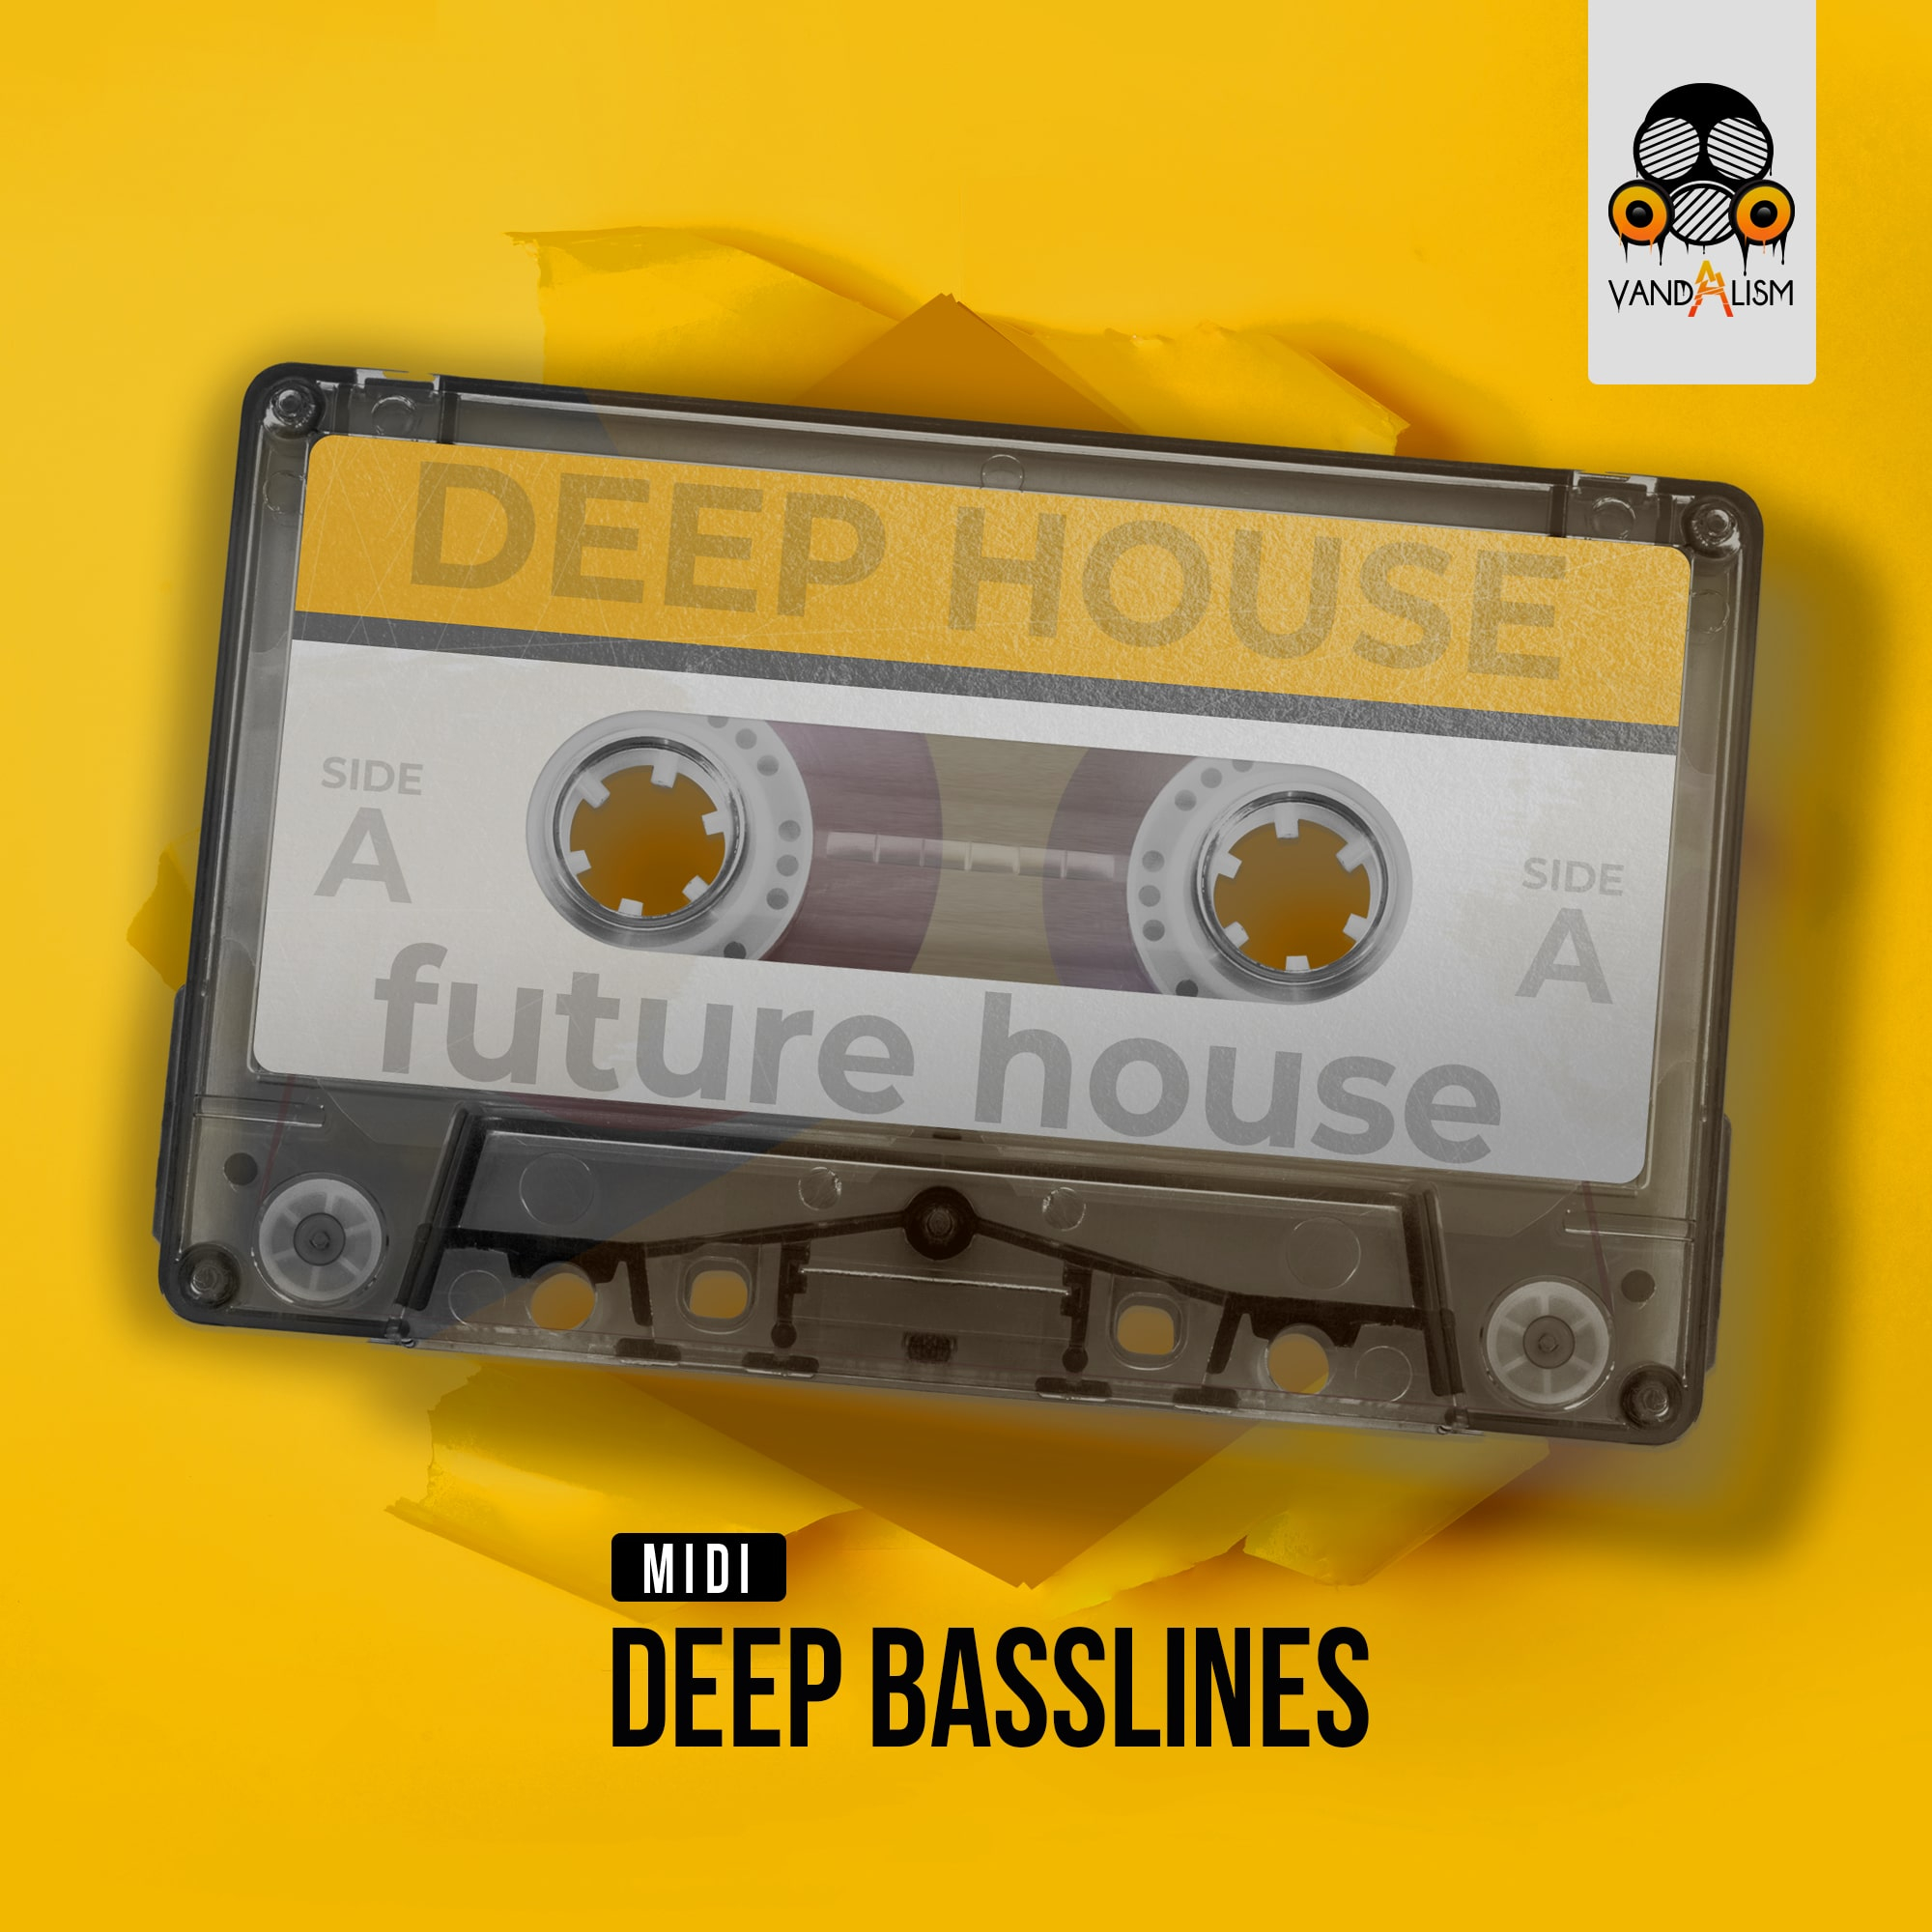 MIDI: Deep Basslines